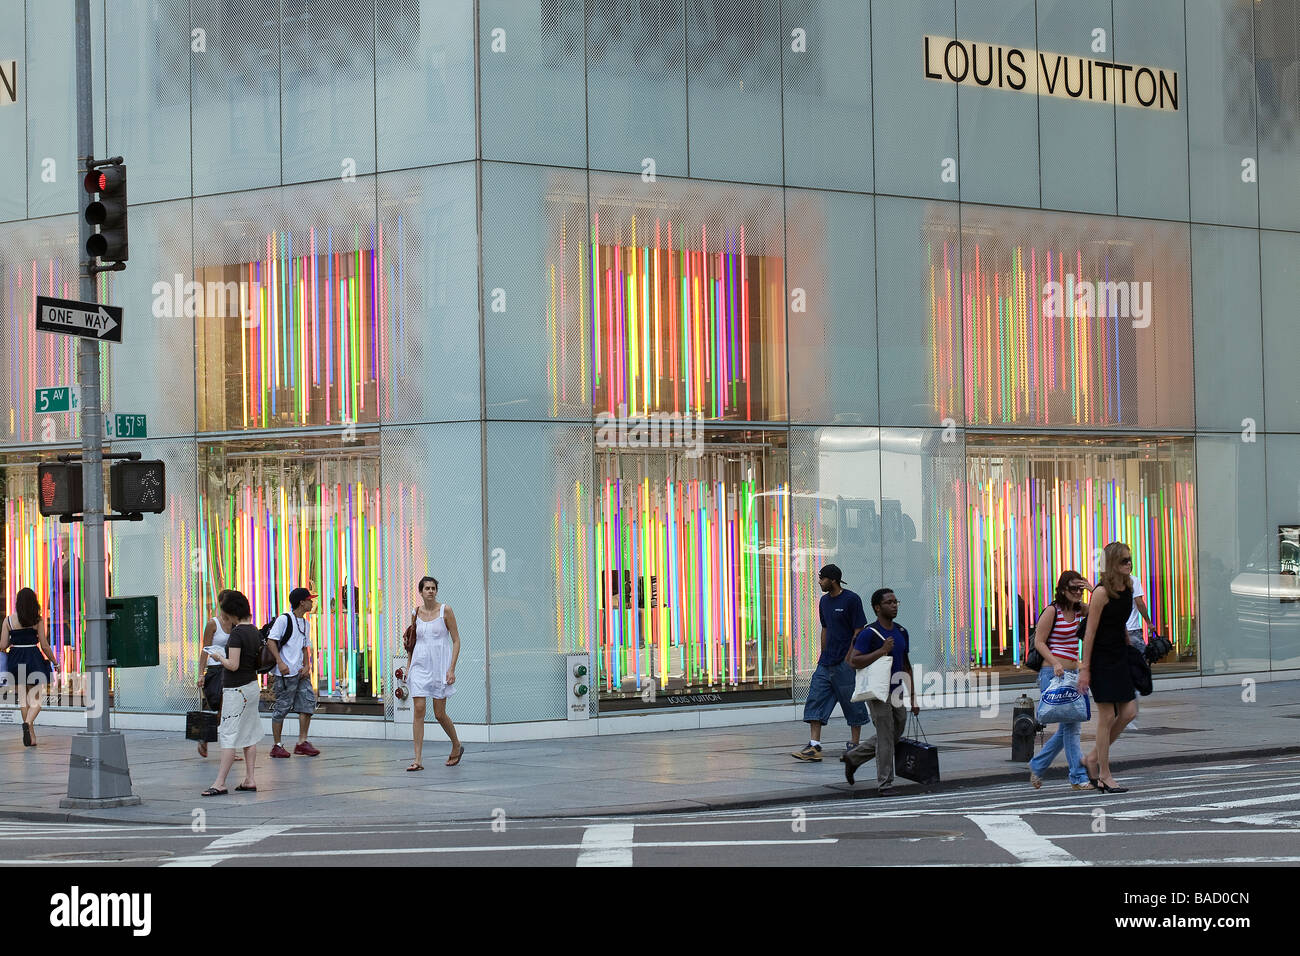 United States, New York city, Manhattan, 5th Avenue, Louis Vuitton Stock Photo: 23642661 - Alamy